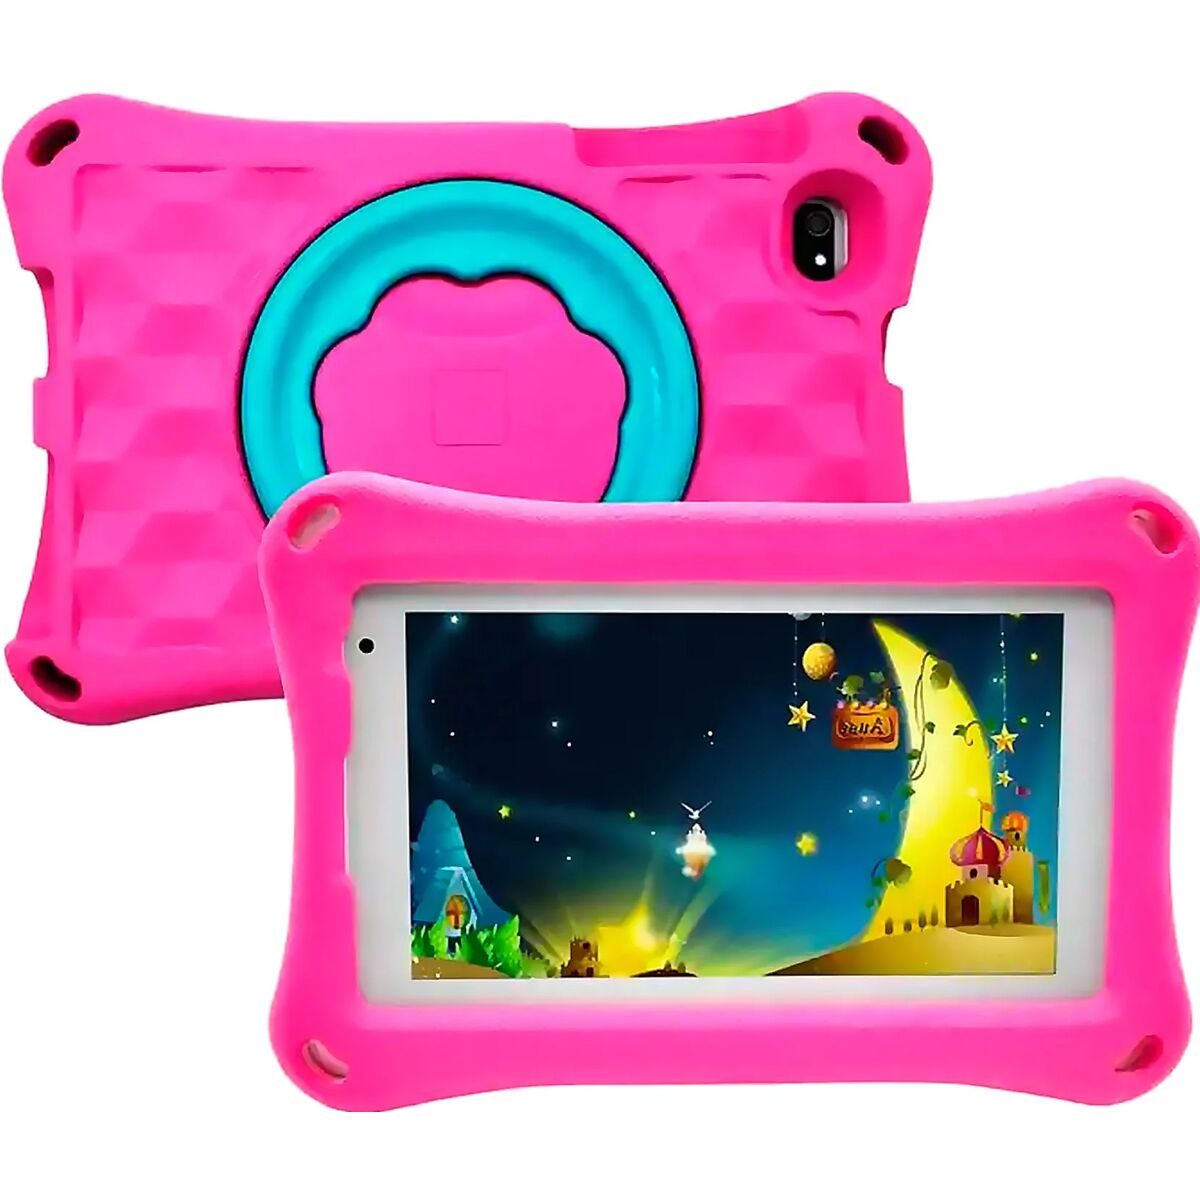 Interaktiv Tablet til Børn K714 Pink 32 GB 2 GB RAM 7"